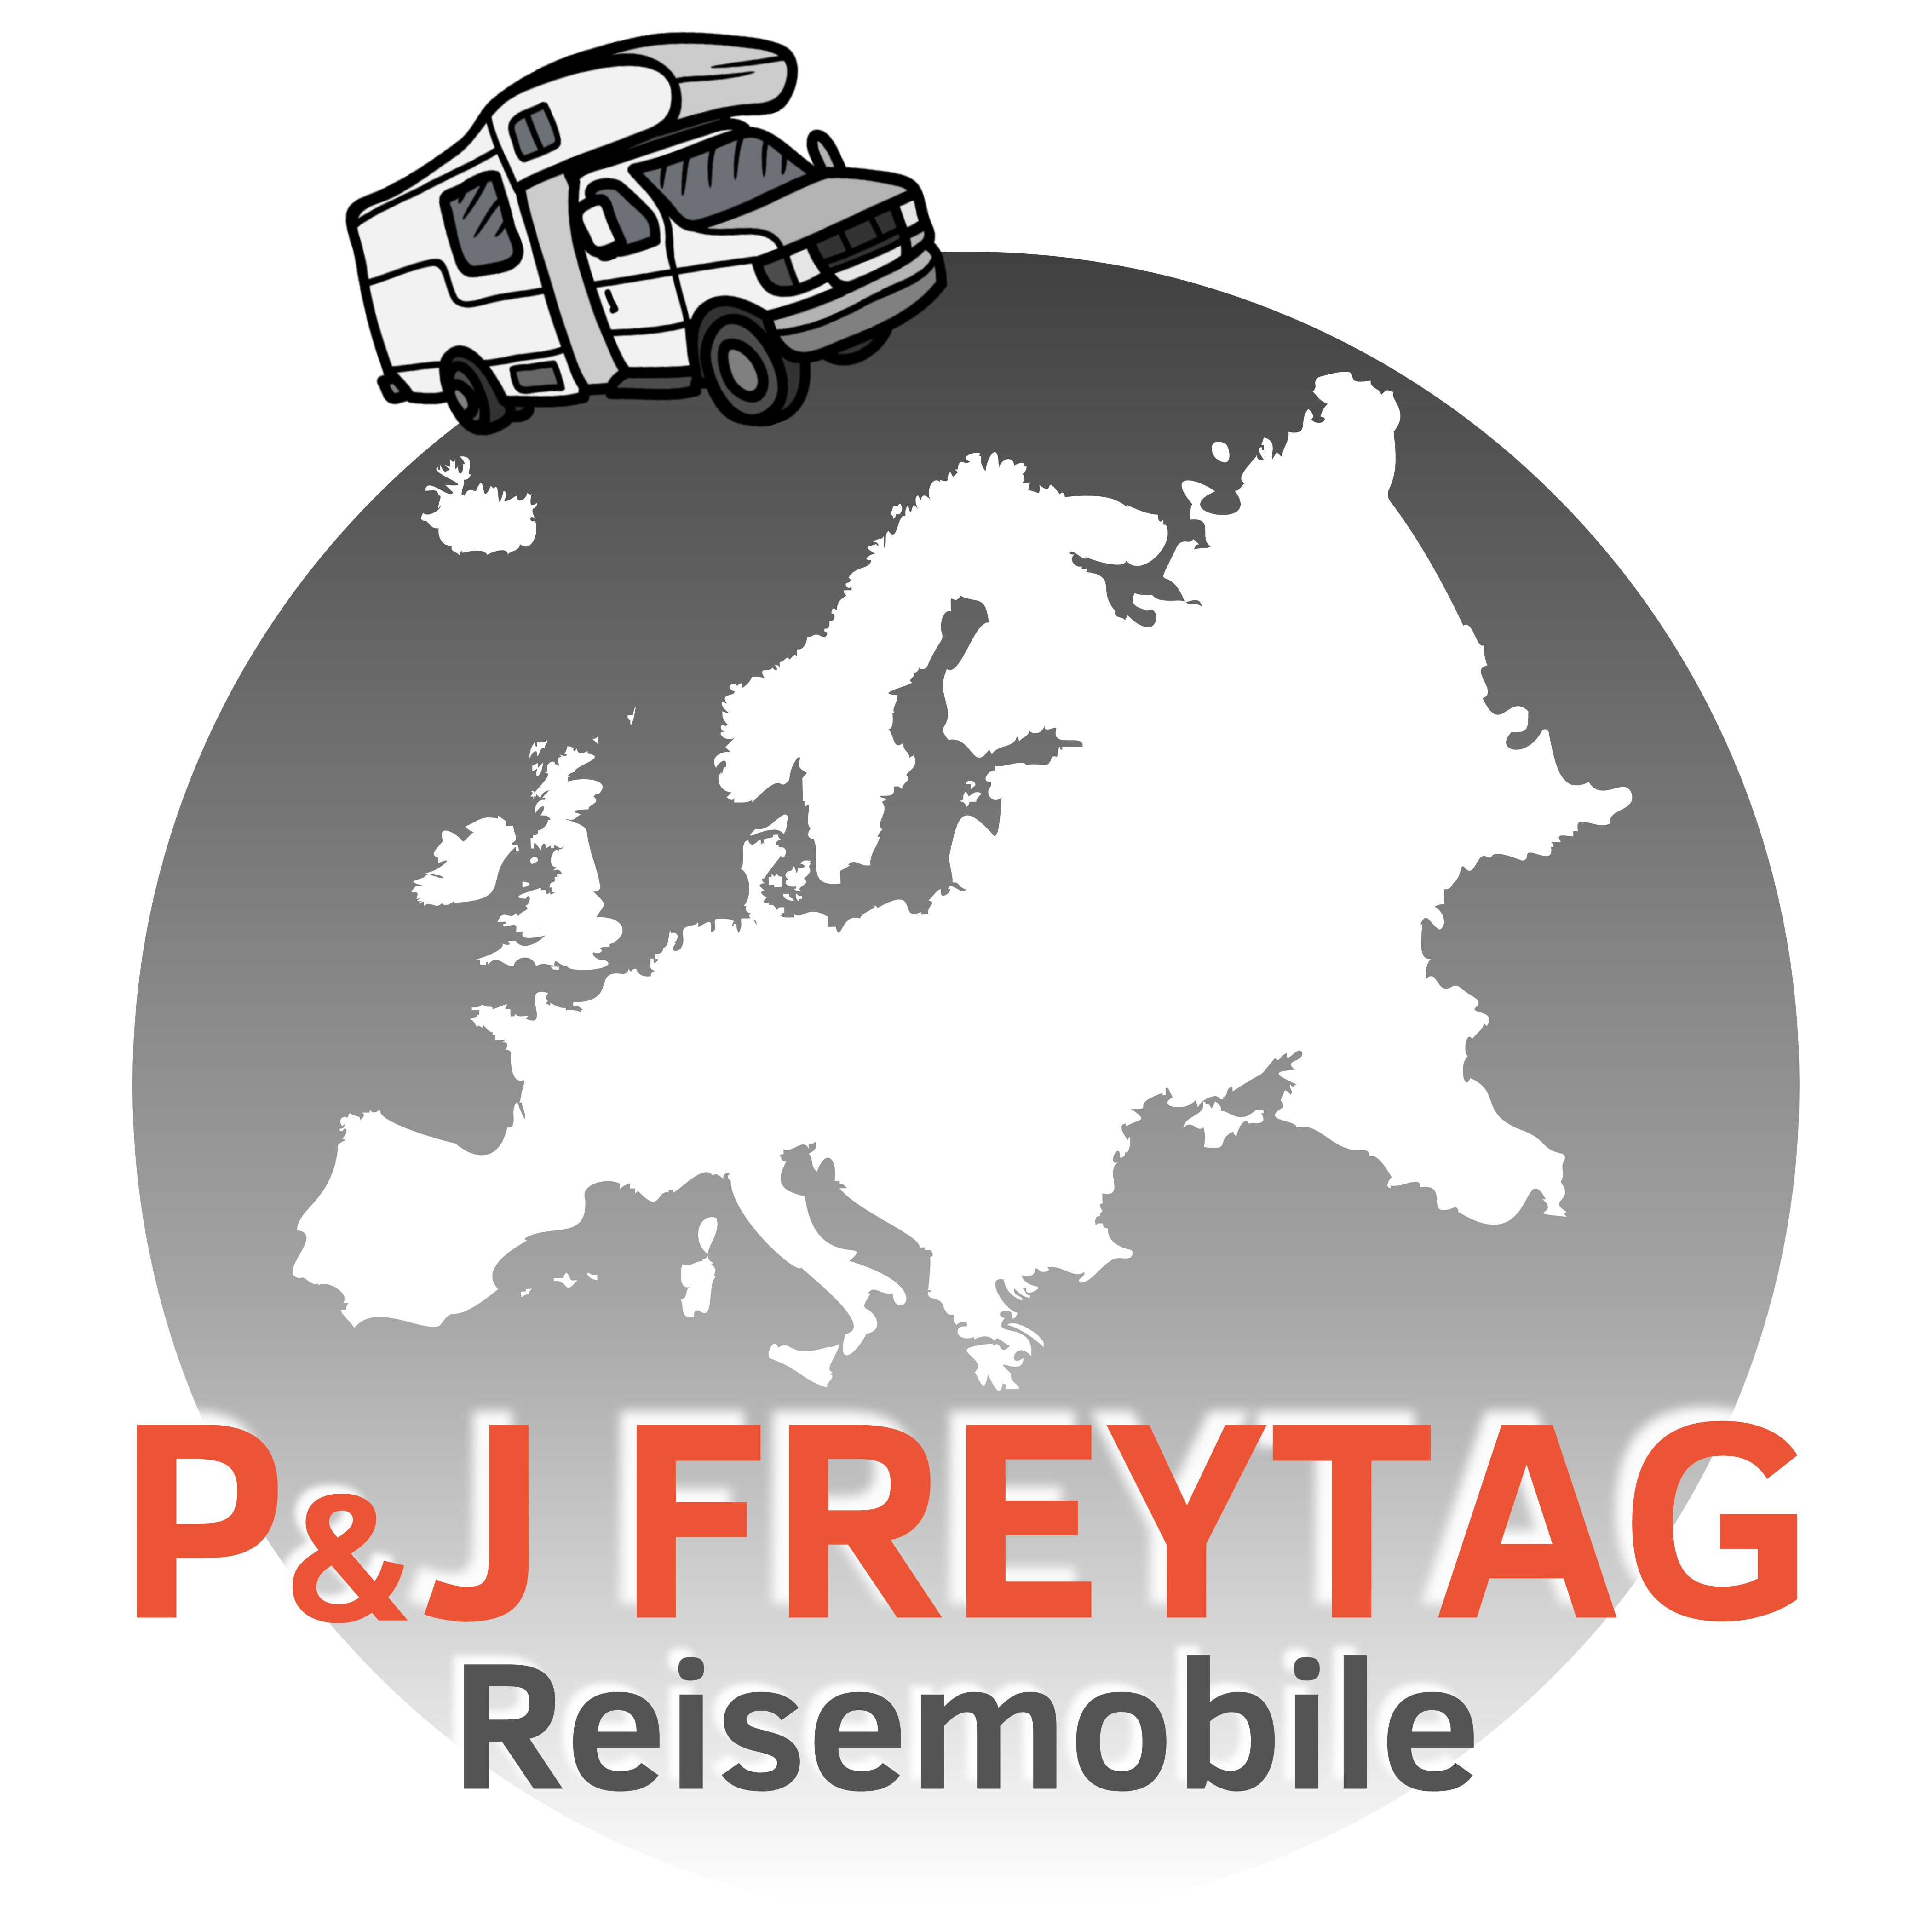 Reisemobile Freytag Logo